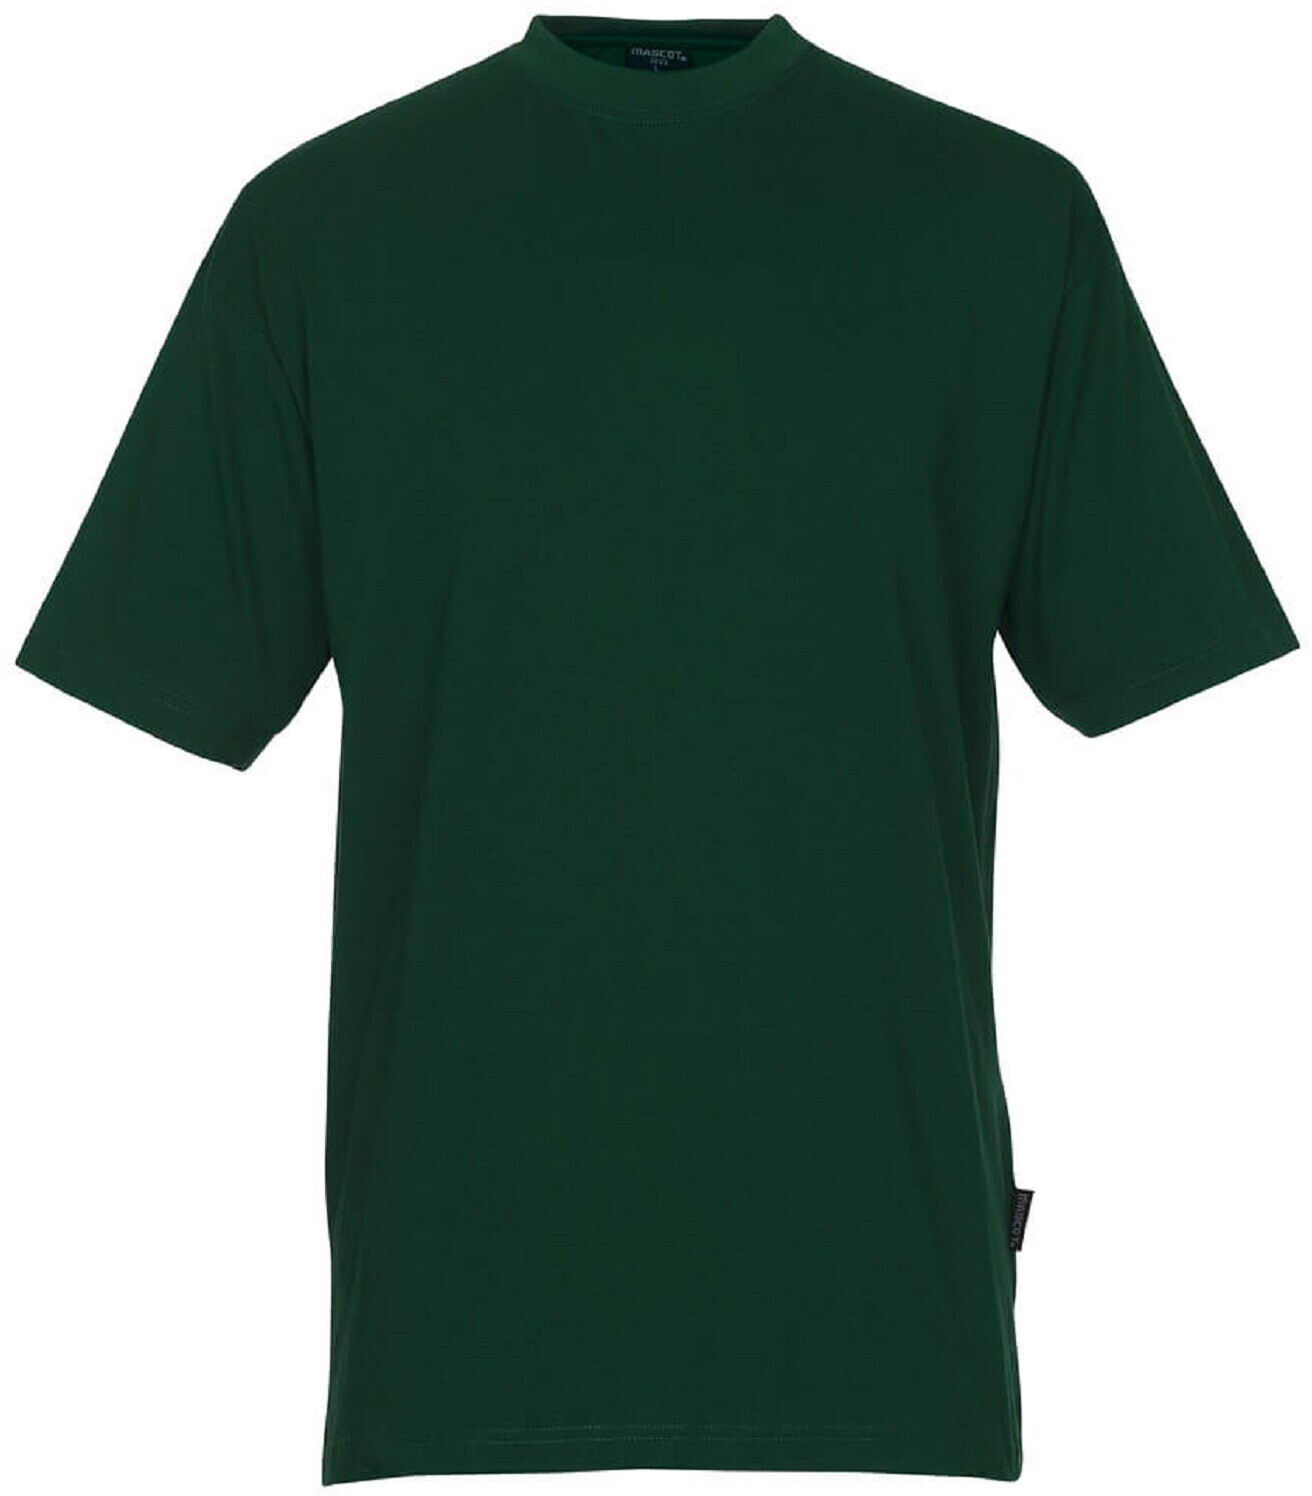 Photos - Safety Equipment Mascot Workwear Mascot T-Shirt Java 00782-250 green